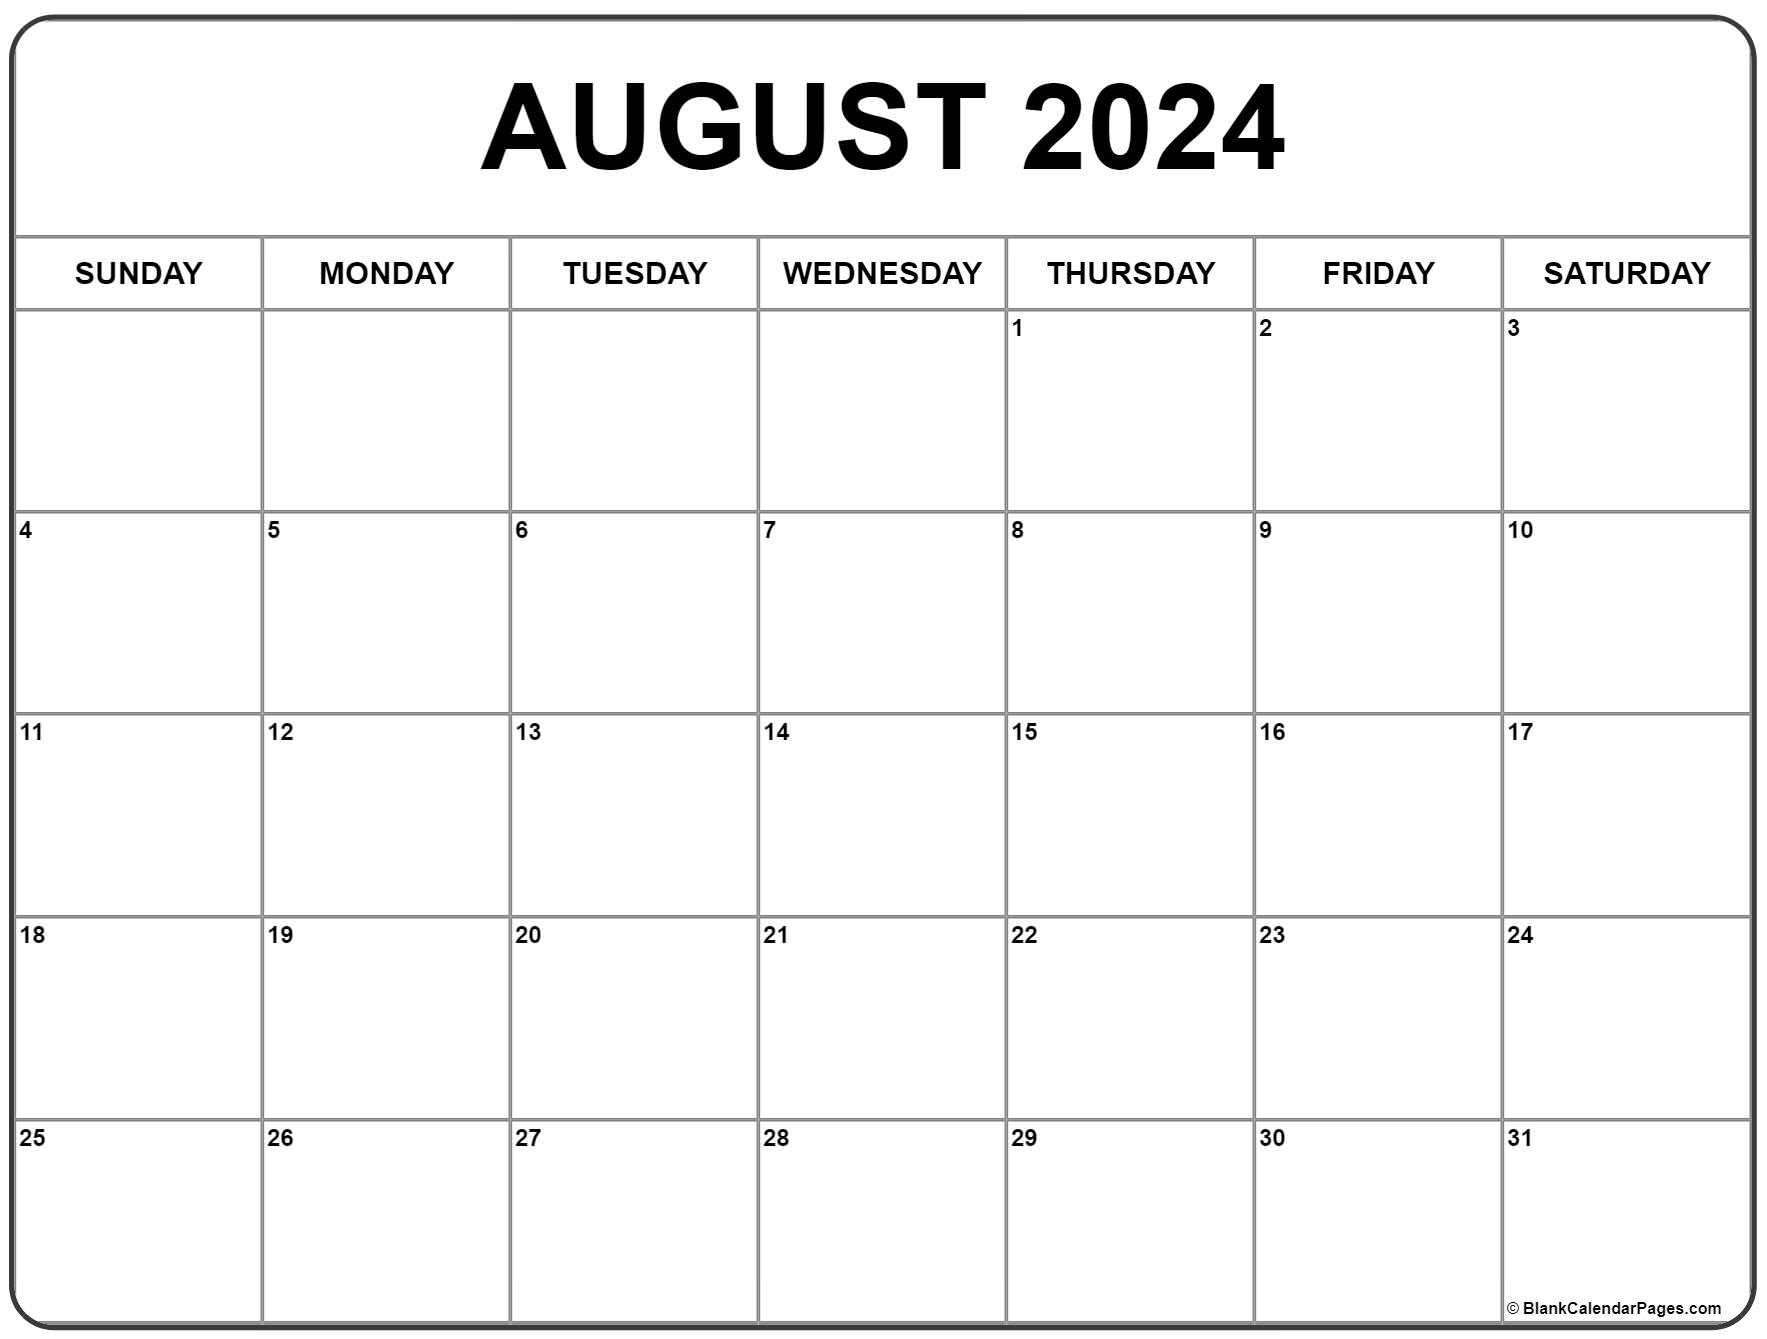 August 2024 Calendar | Free Printable Calendar for Free Printable Calendar August 2024